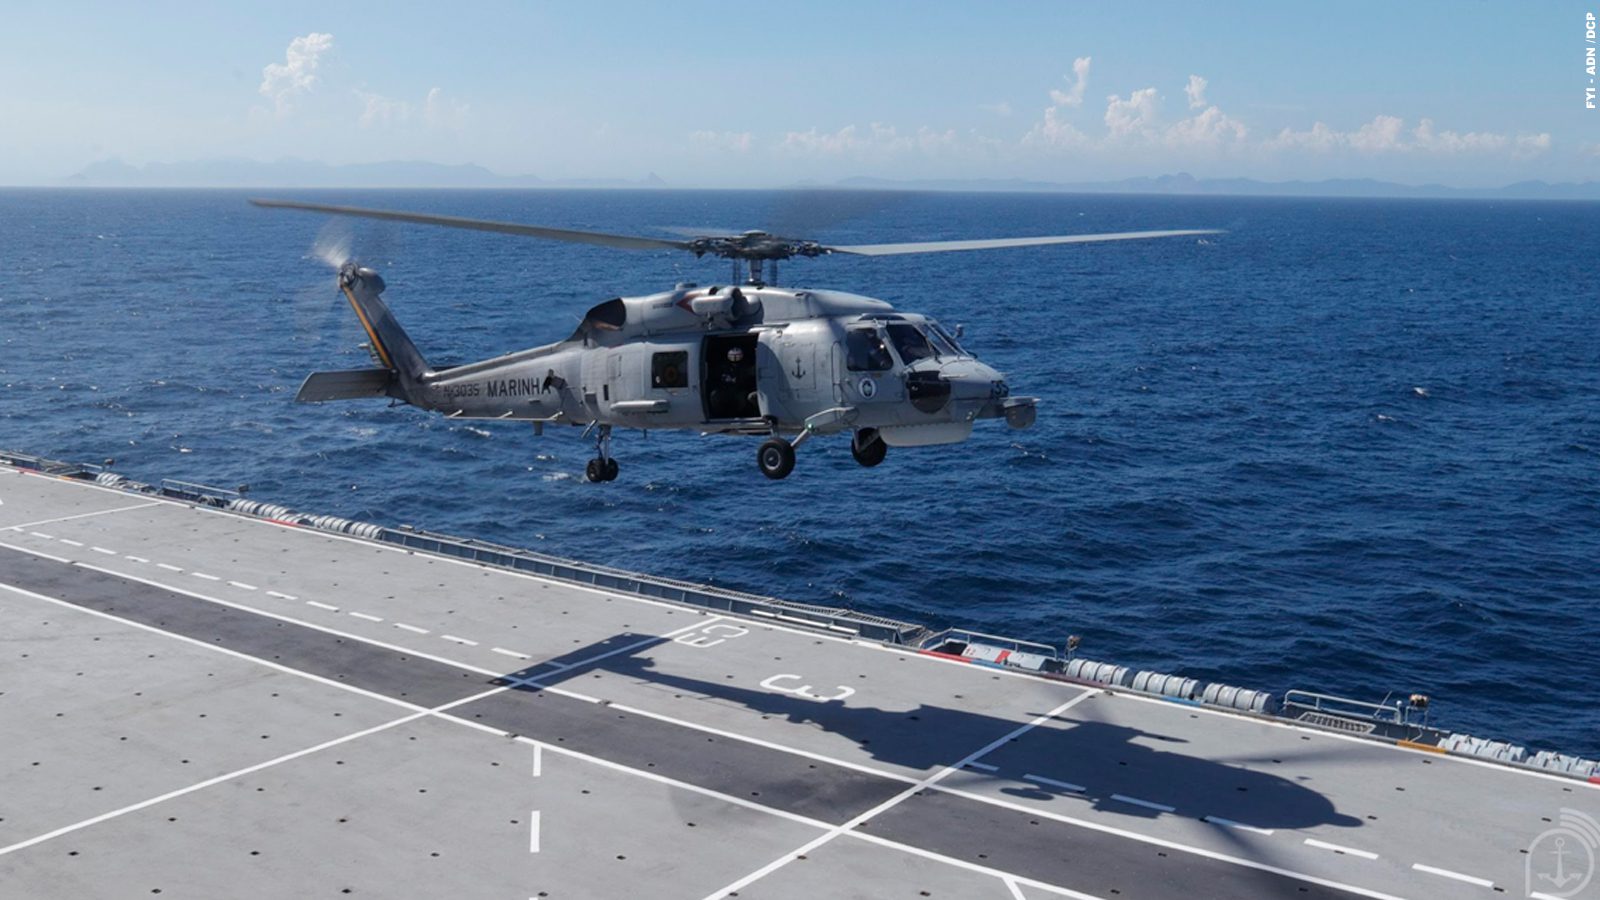 SH-16 "Seahawk" aircraft reach 10,000 flight hours in the Brazilian Navy